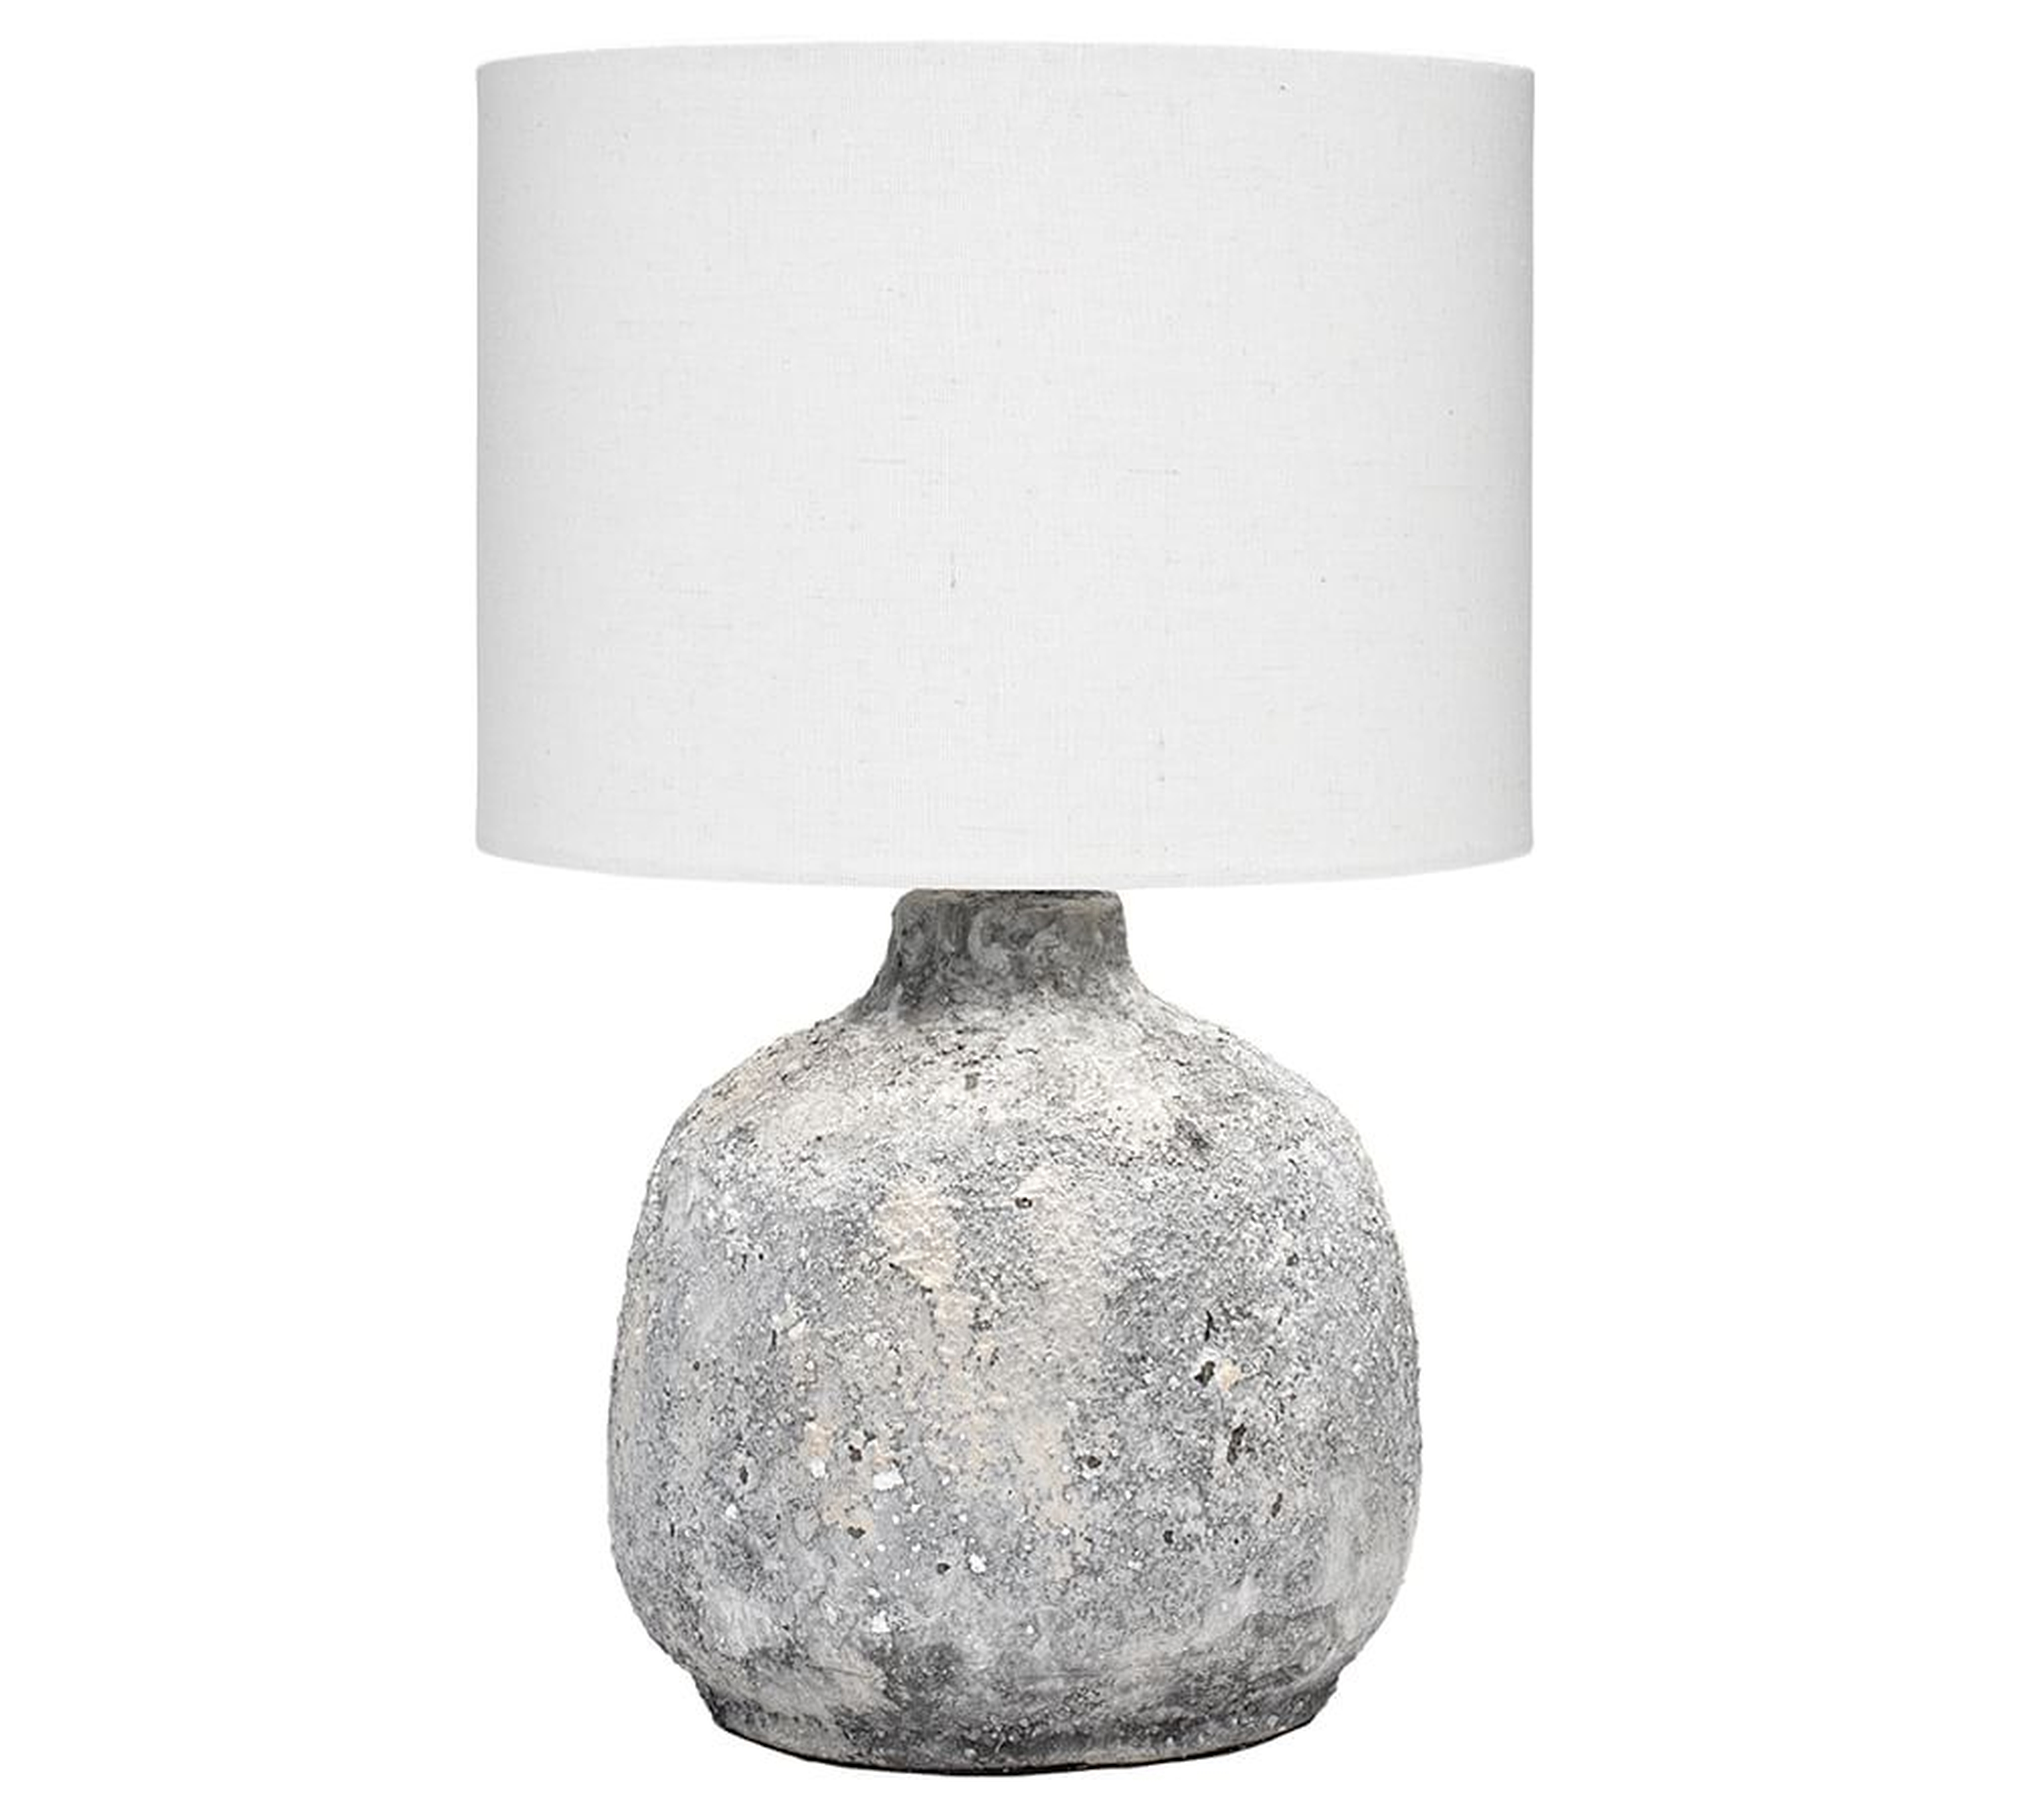 Barstow Ceramic Table Lamp, Grey Textured Ceramic, 14.5" - Pottery Barn